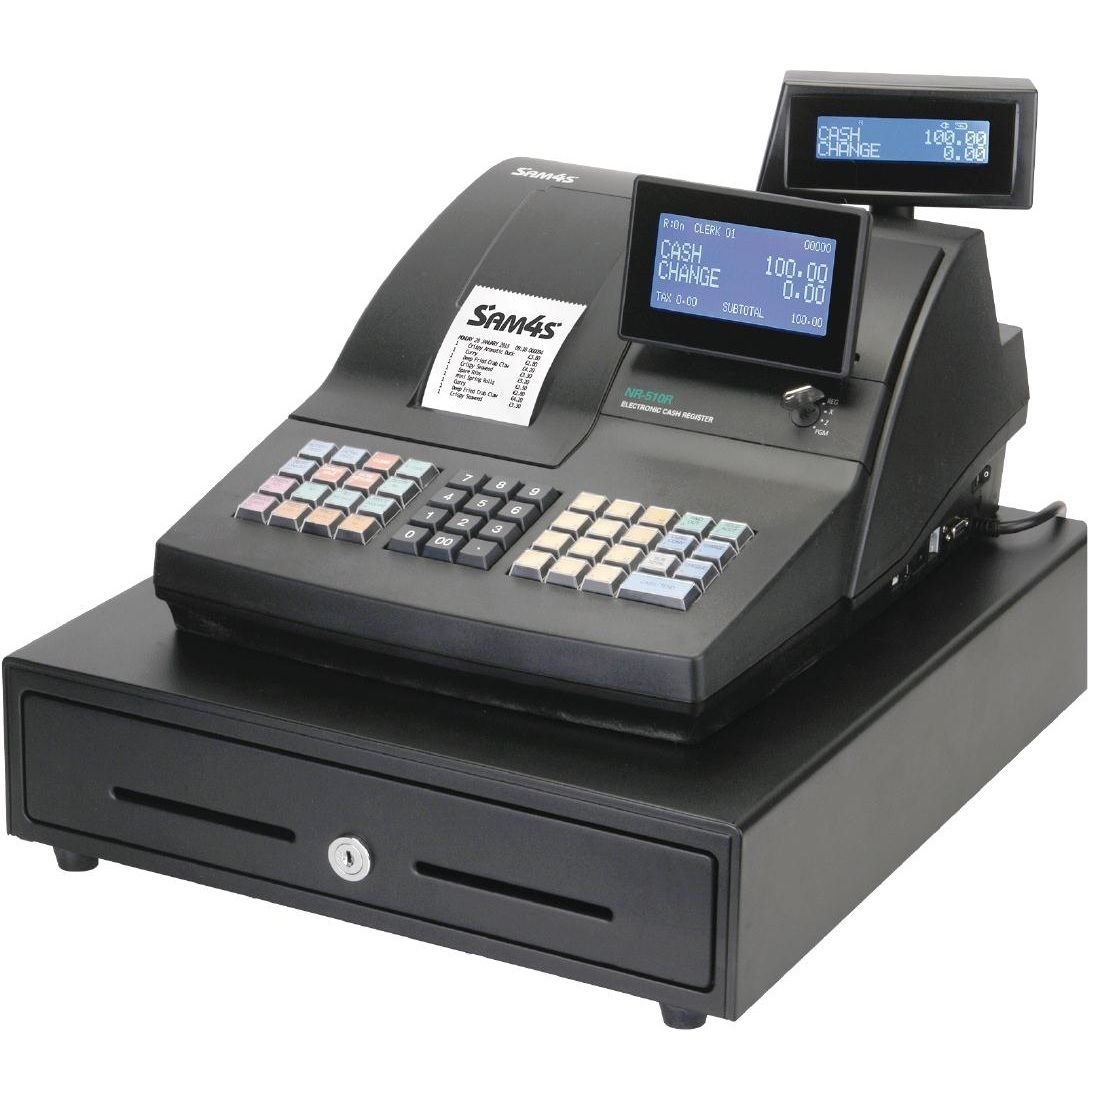 *SAM4s cash register till drawer key Ref:2424fits 5100-5200-390-5240-510-920-940 